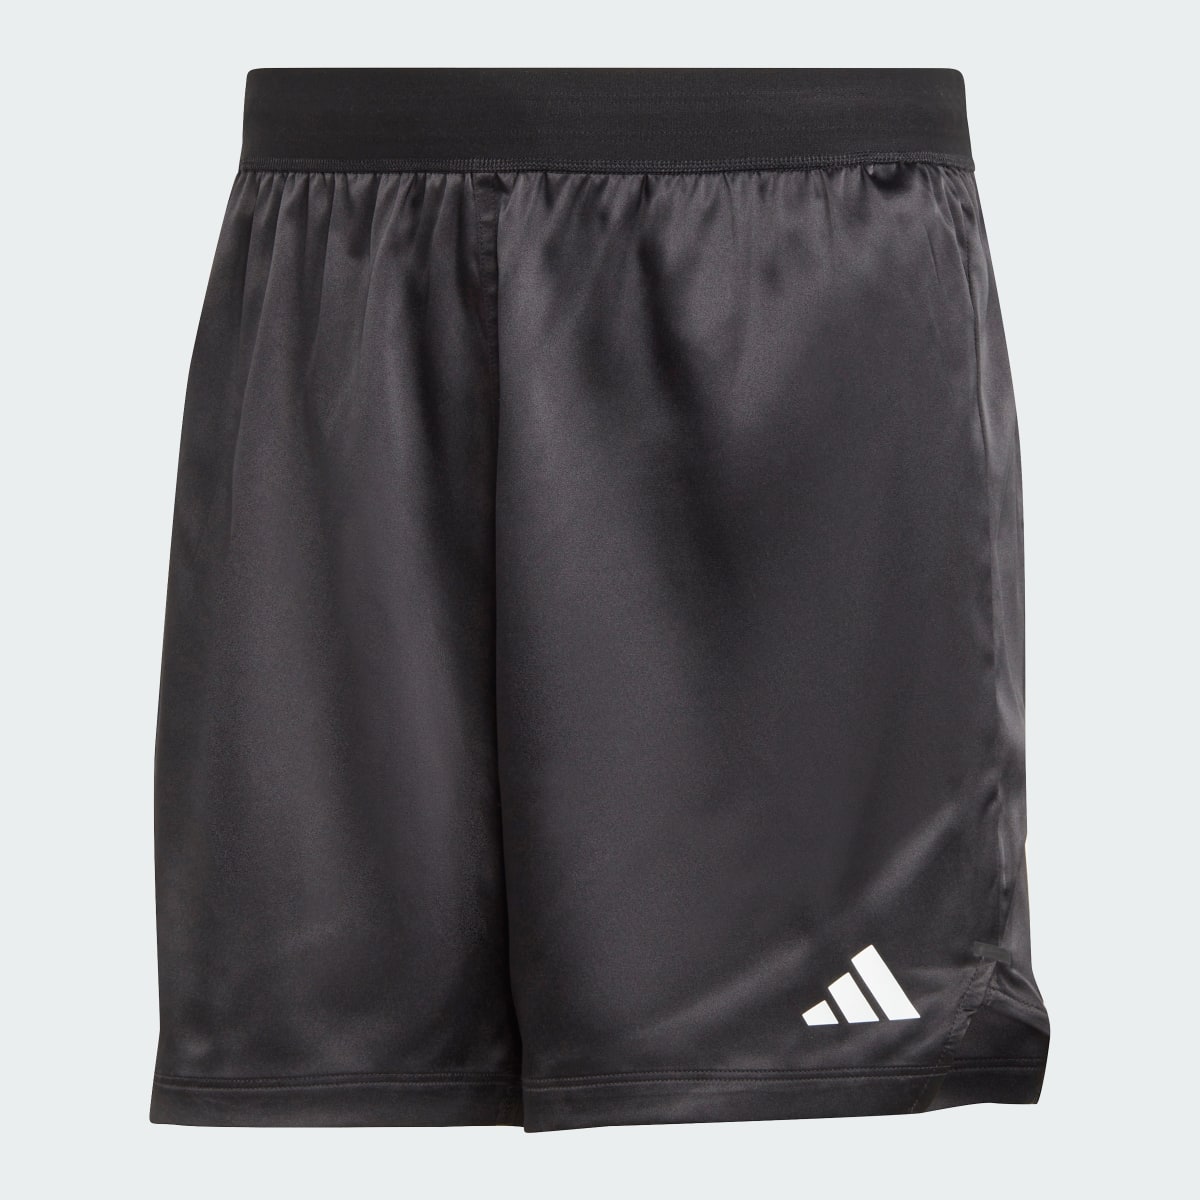 Adidas Power Workout Shorts. 5